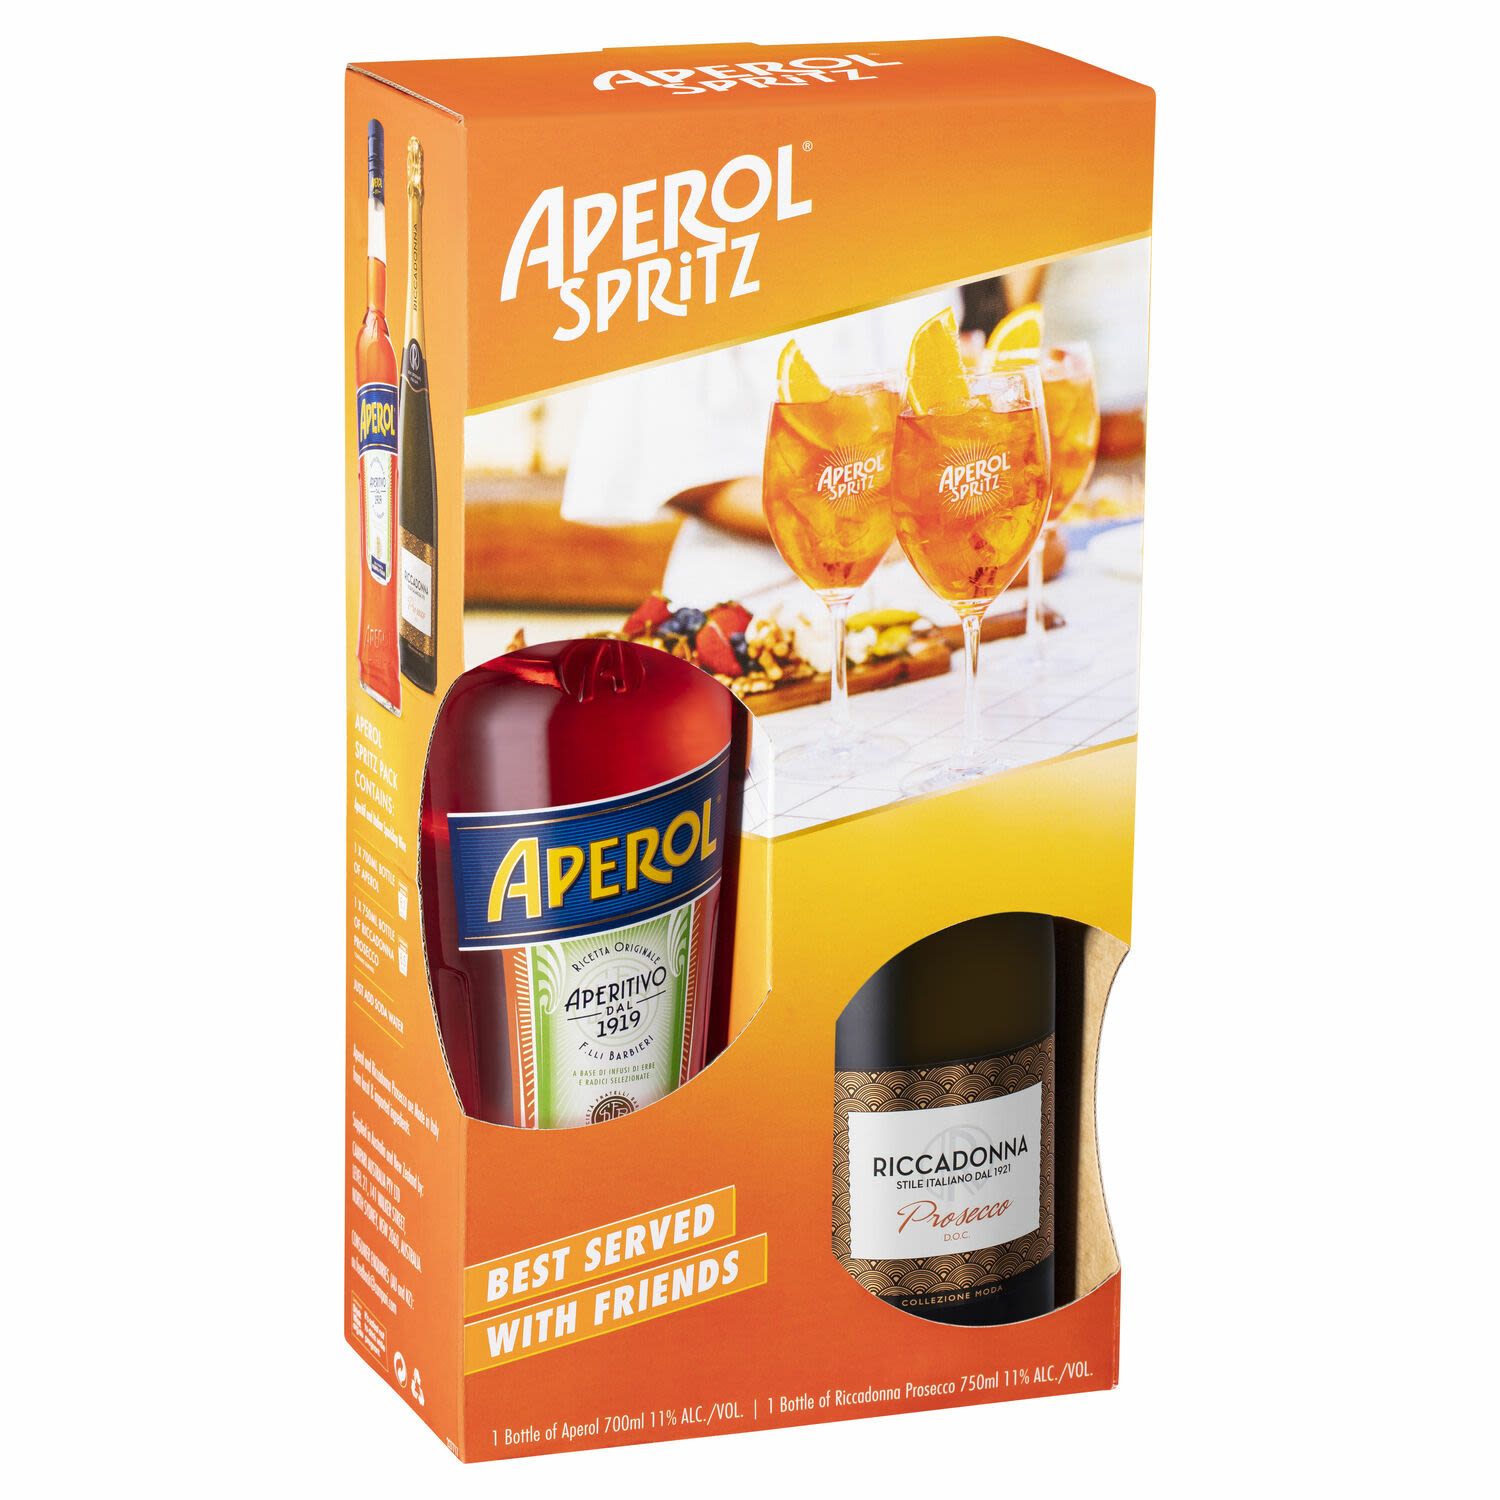 Aperol Spritz Pack (Riccadonna Prosecco + Aperol)